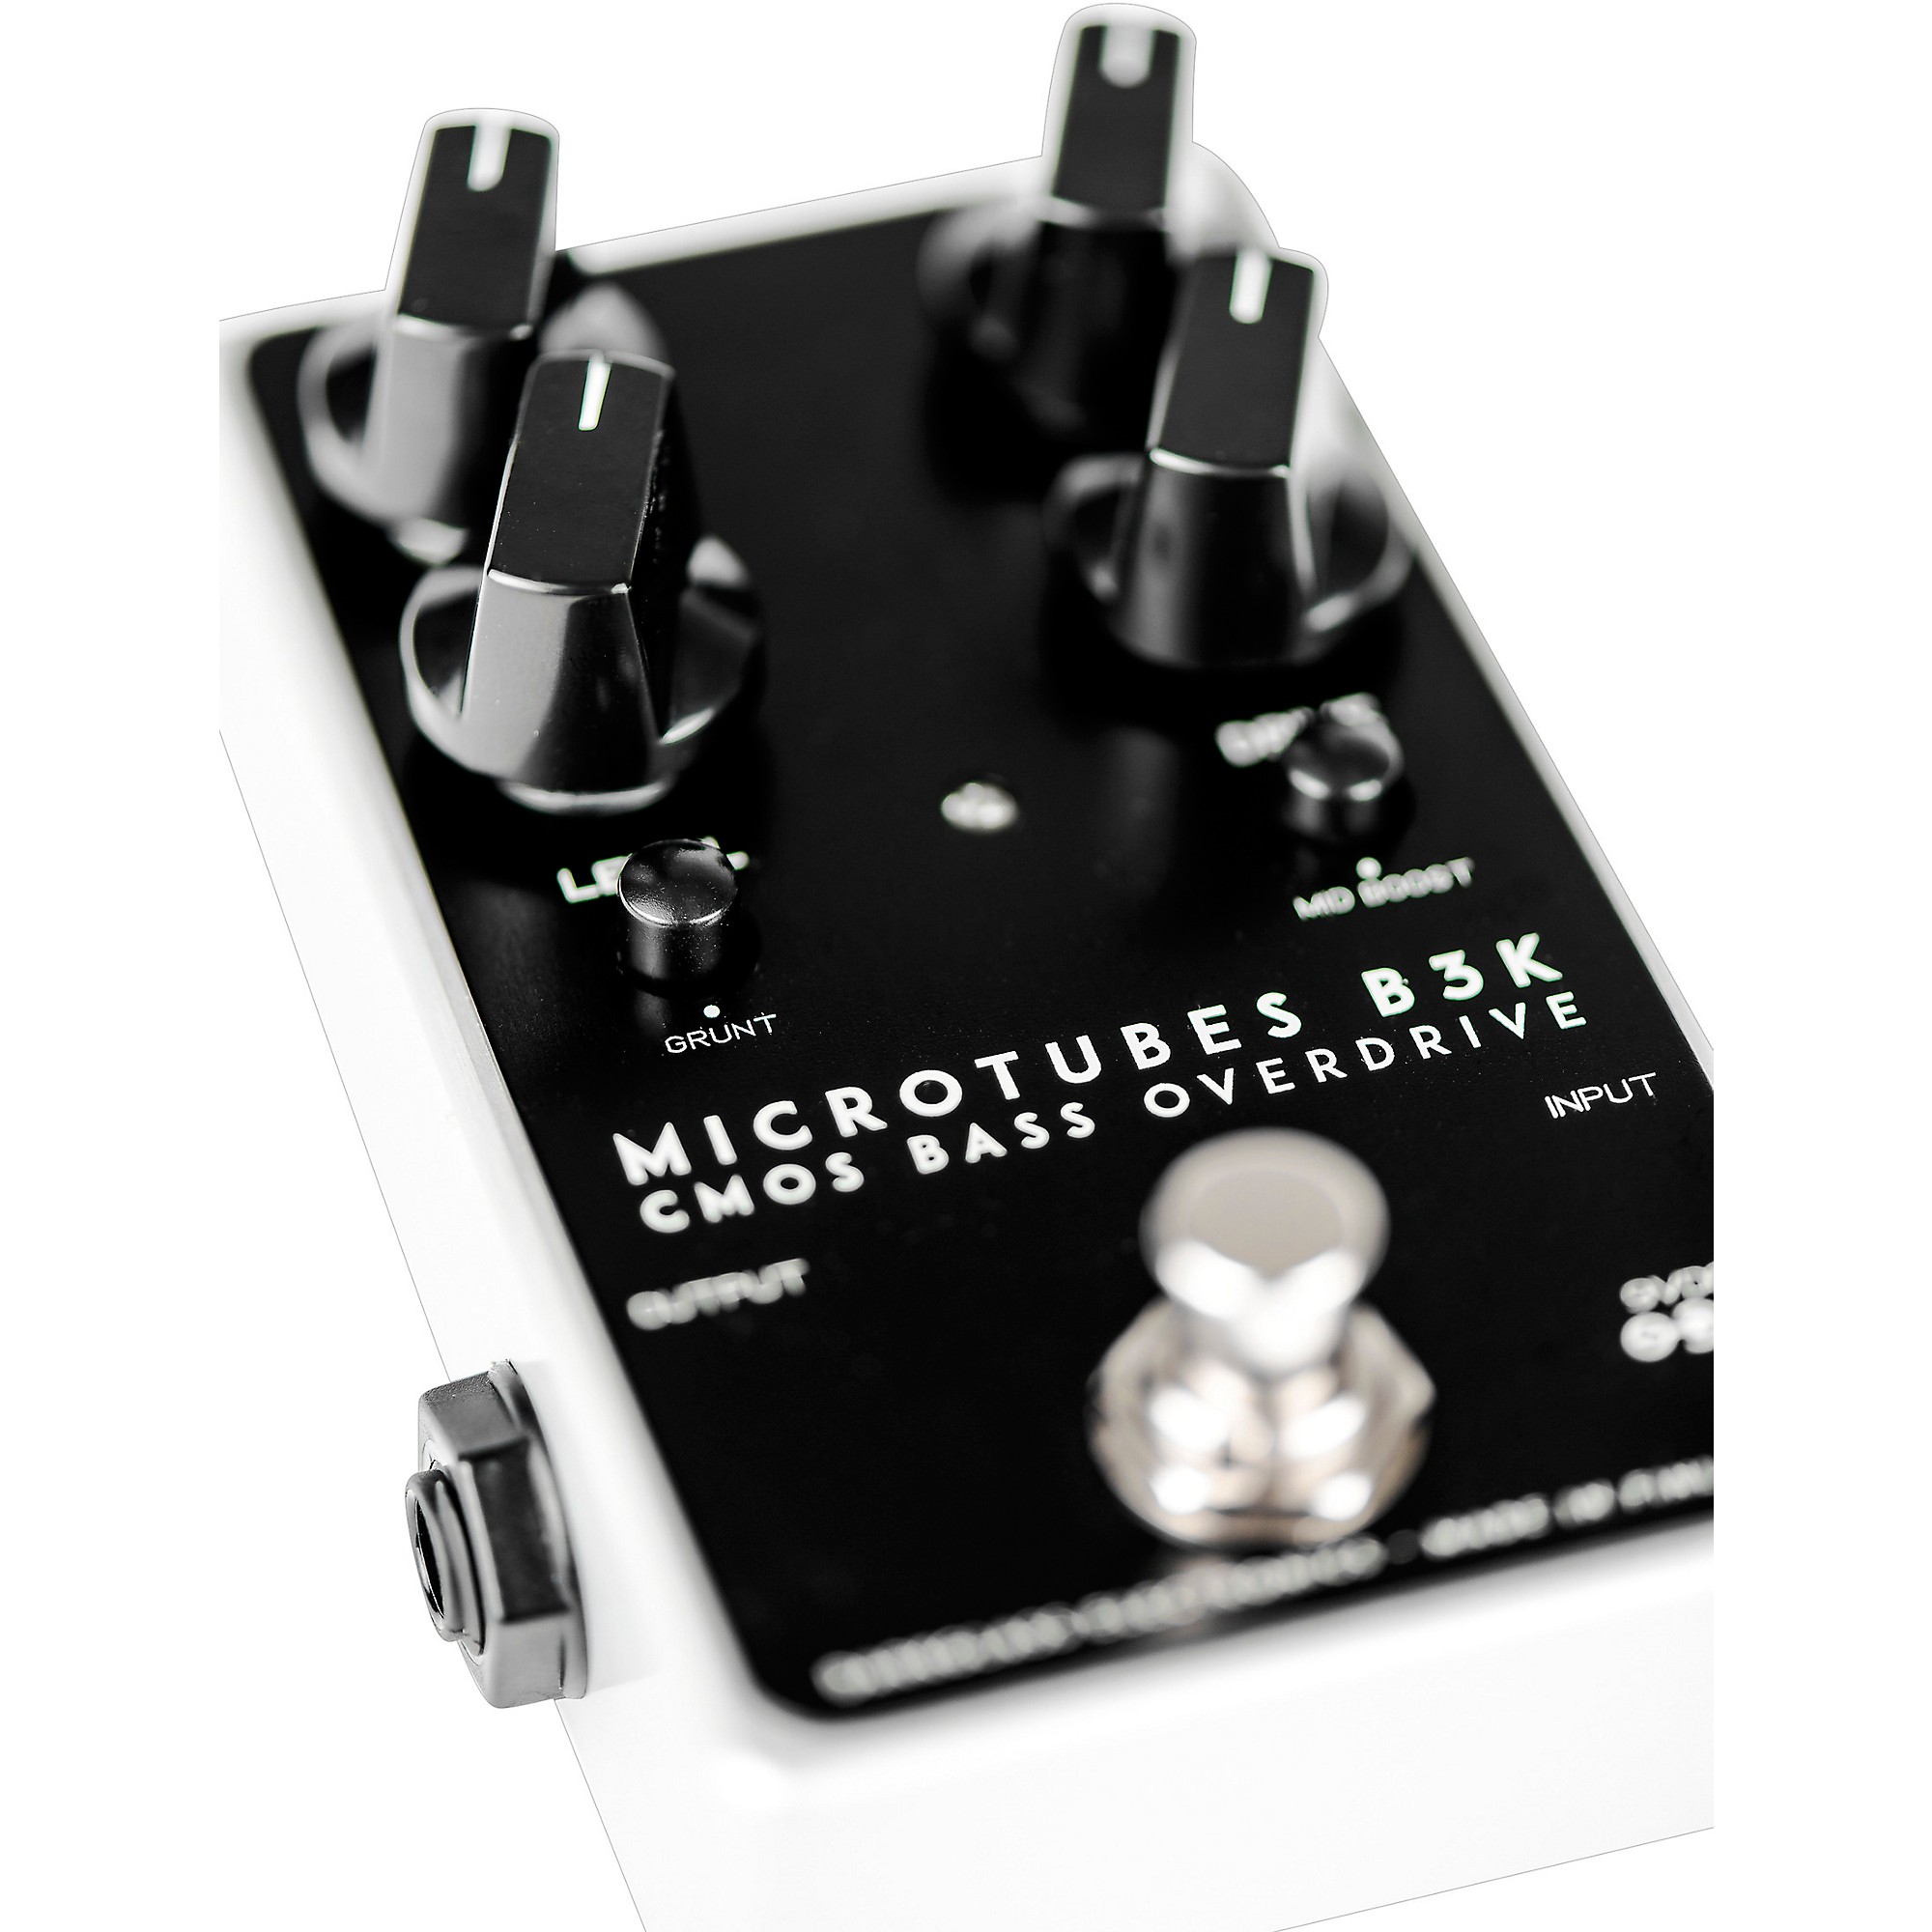 Darkglass Microtubes B3K V2 Bass Overdrive Effects Pedal | Guitar